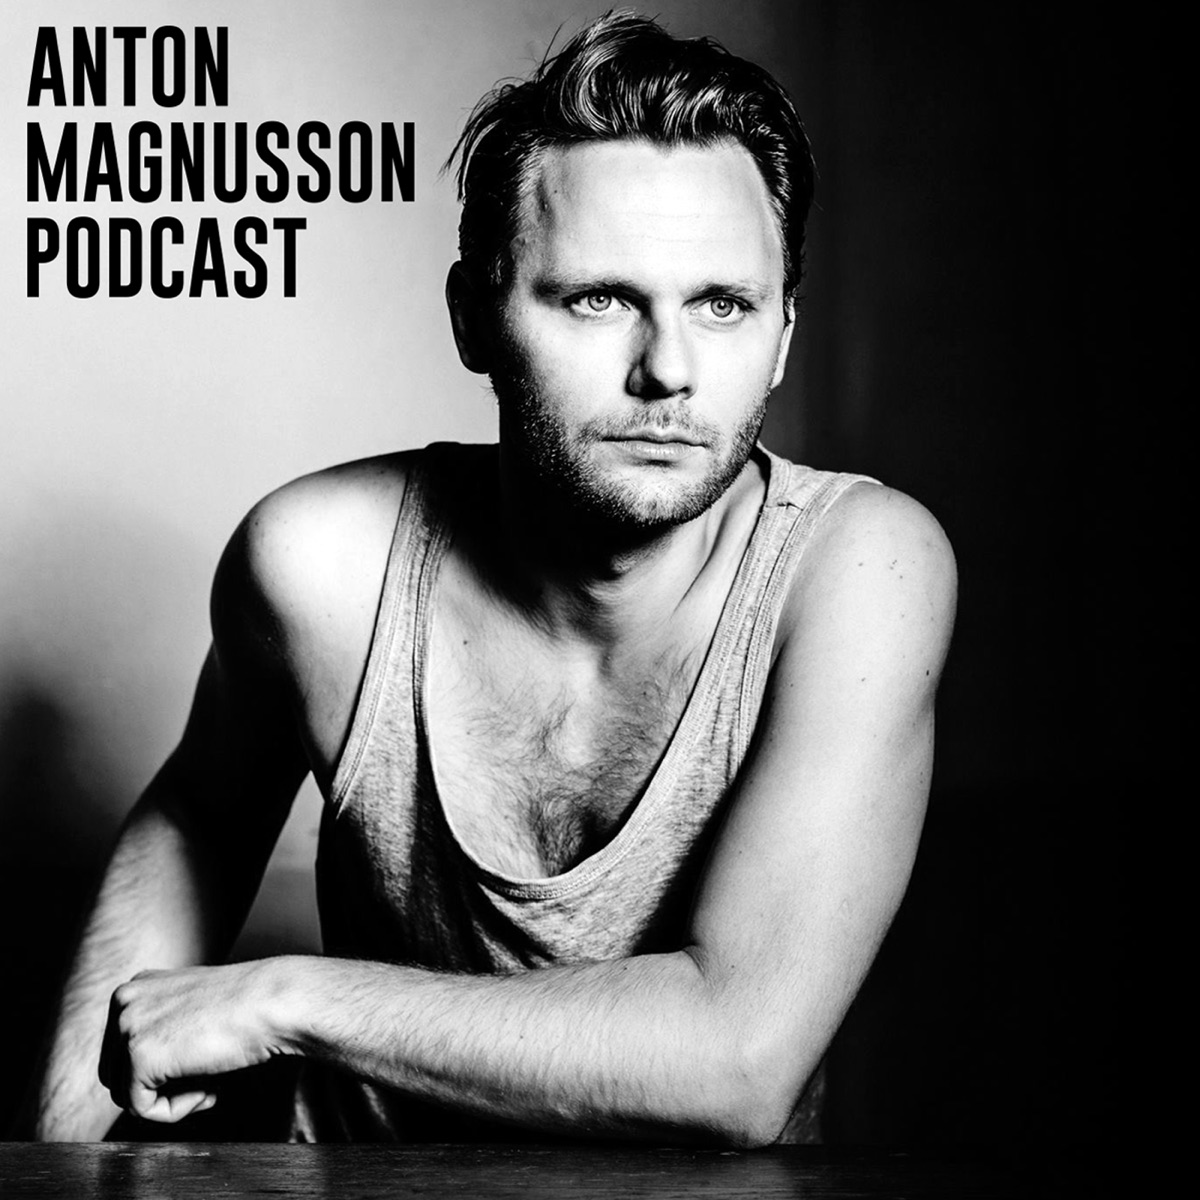 Anton Magnusson podcast